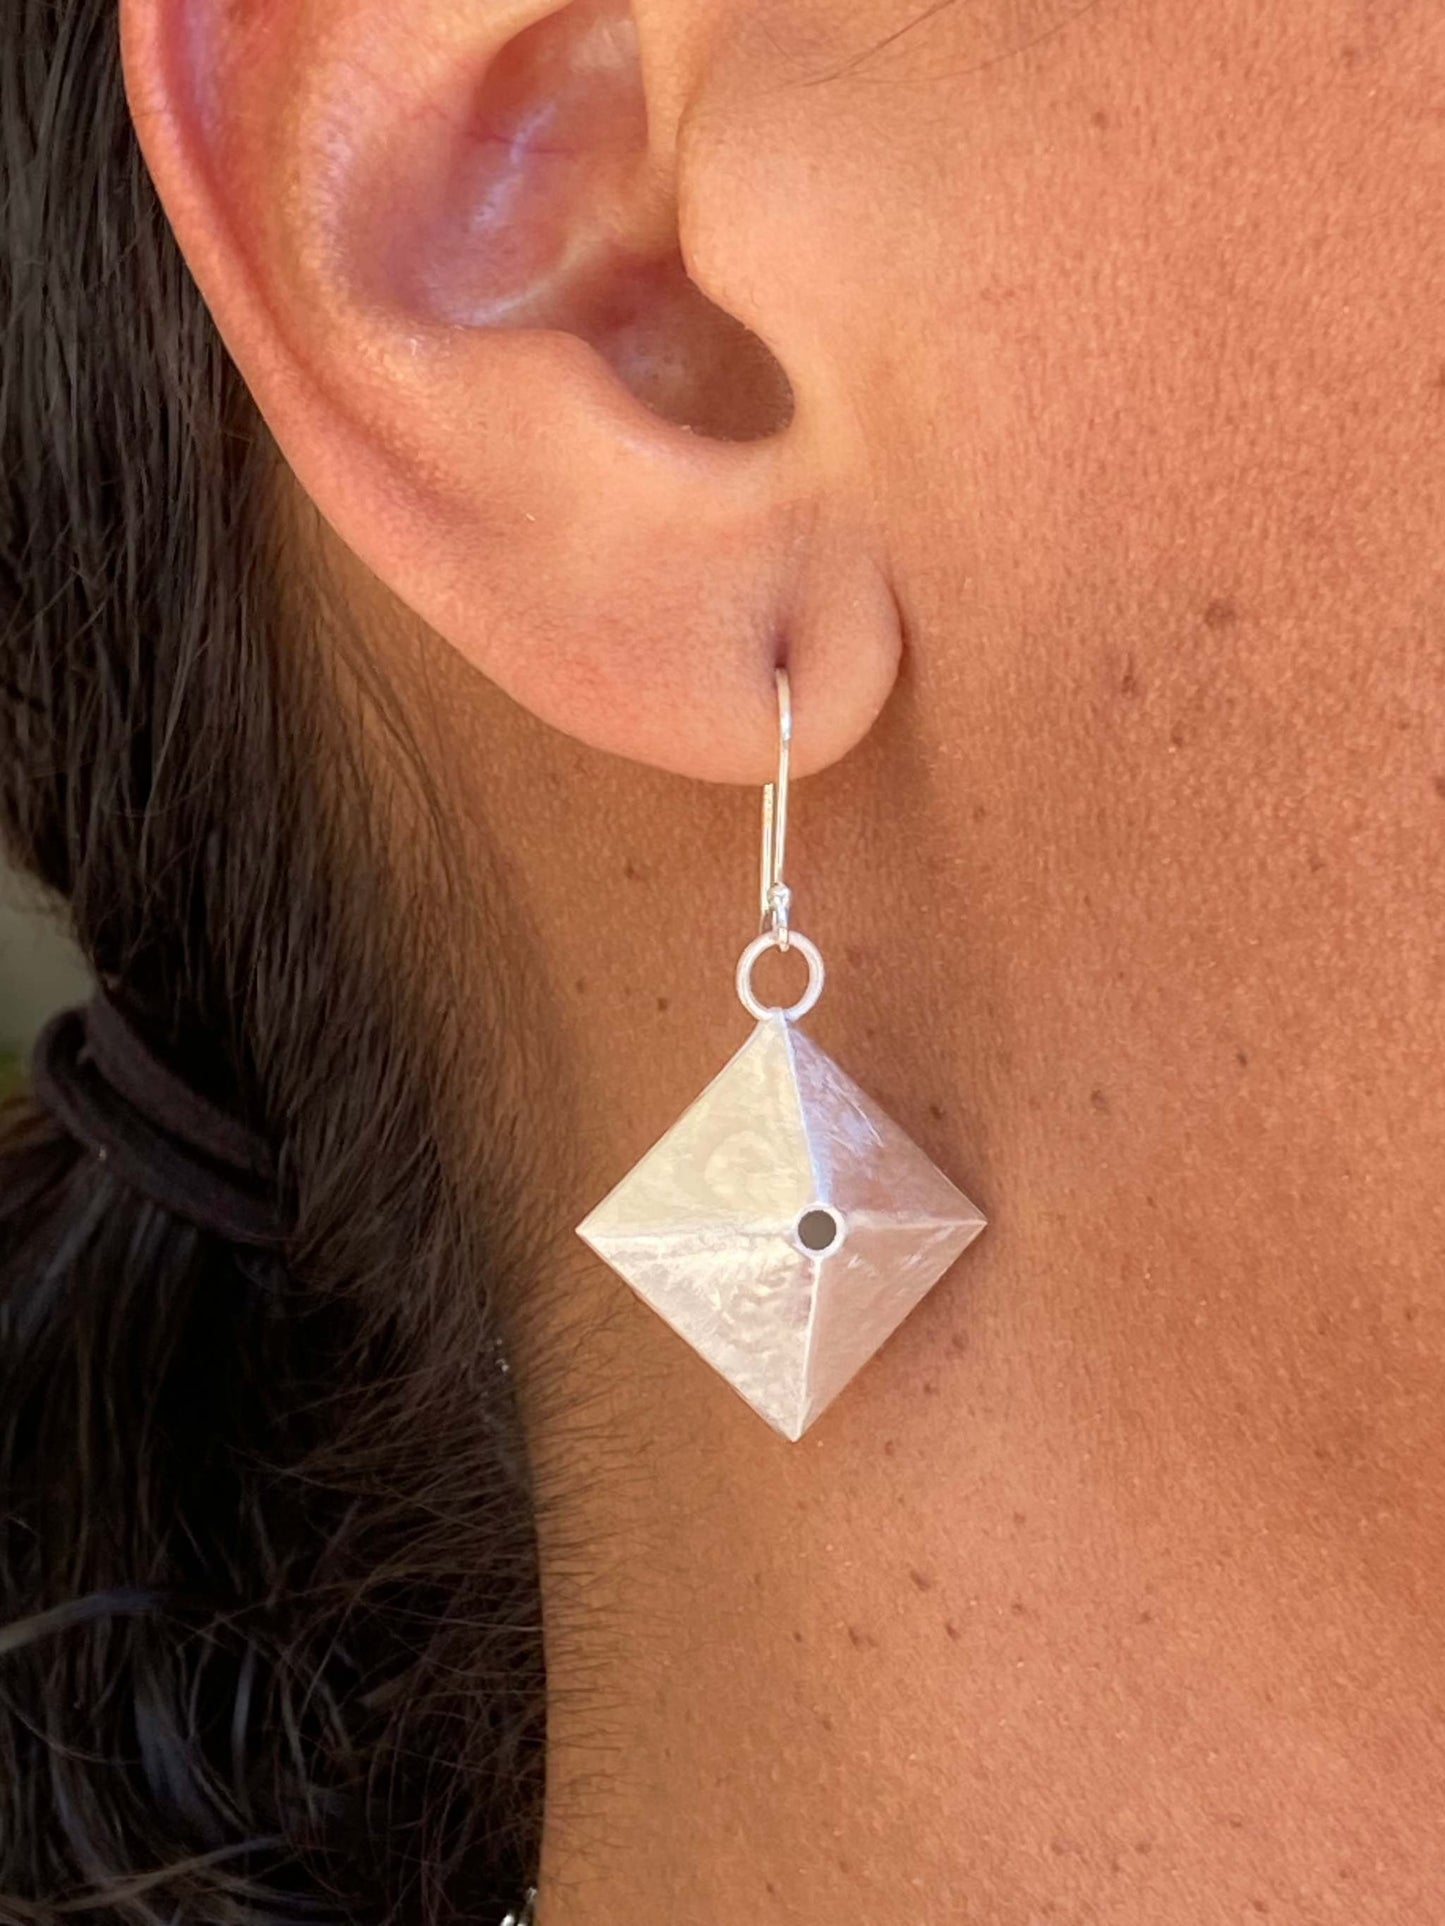 Pyramid Earring in Ear by Rahaima.com